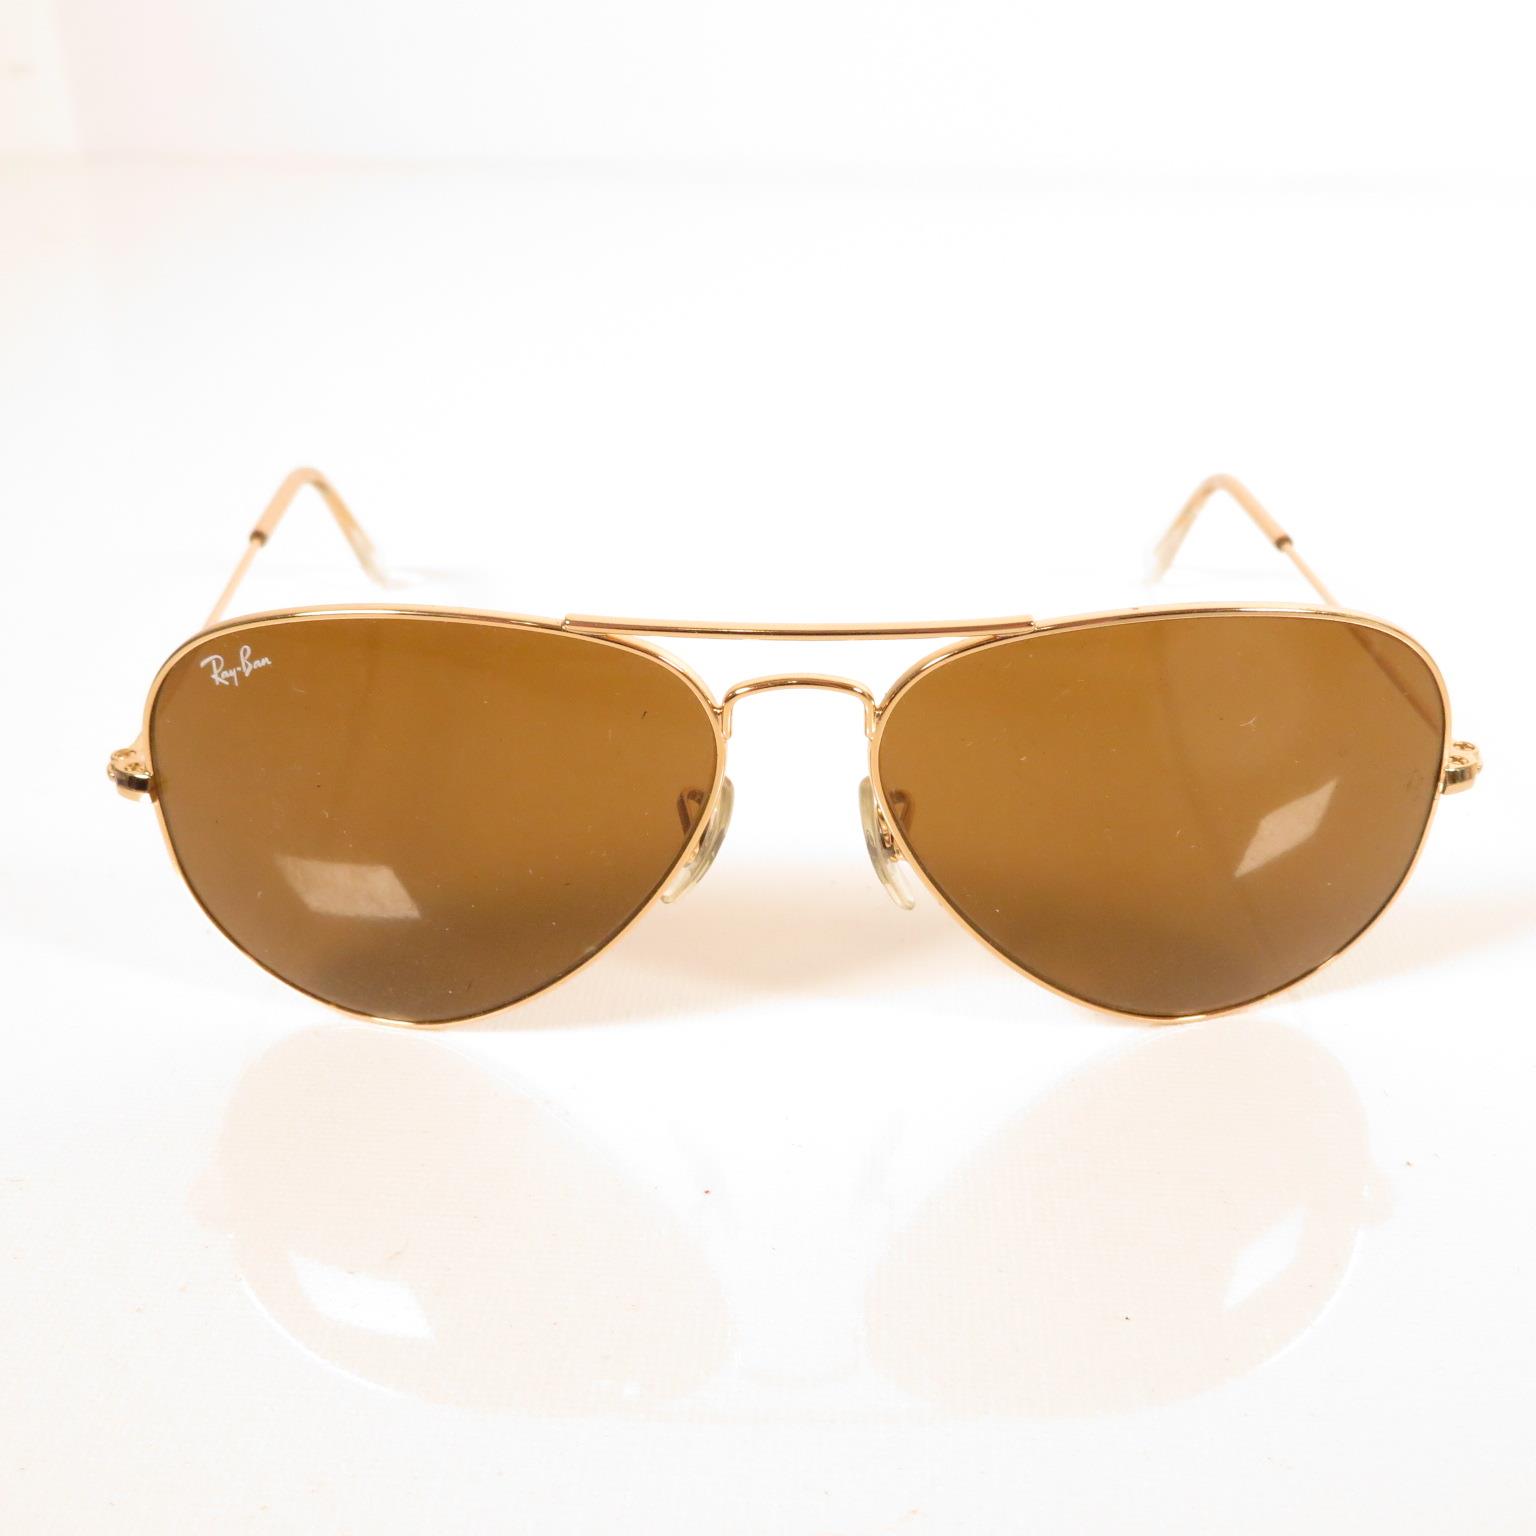 4x boxed Ray Ban sunglasses and 4x loose Ray Ban sunglasses - - Image 2 of 16